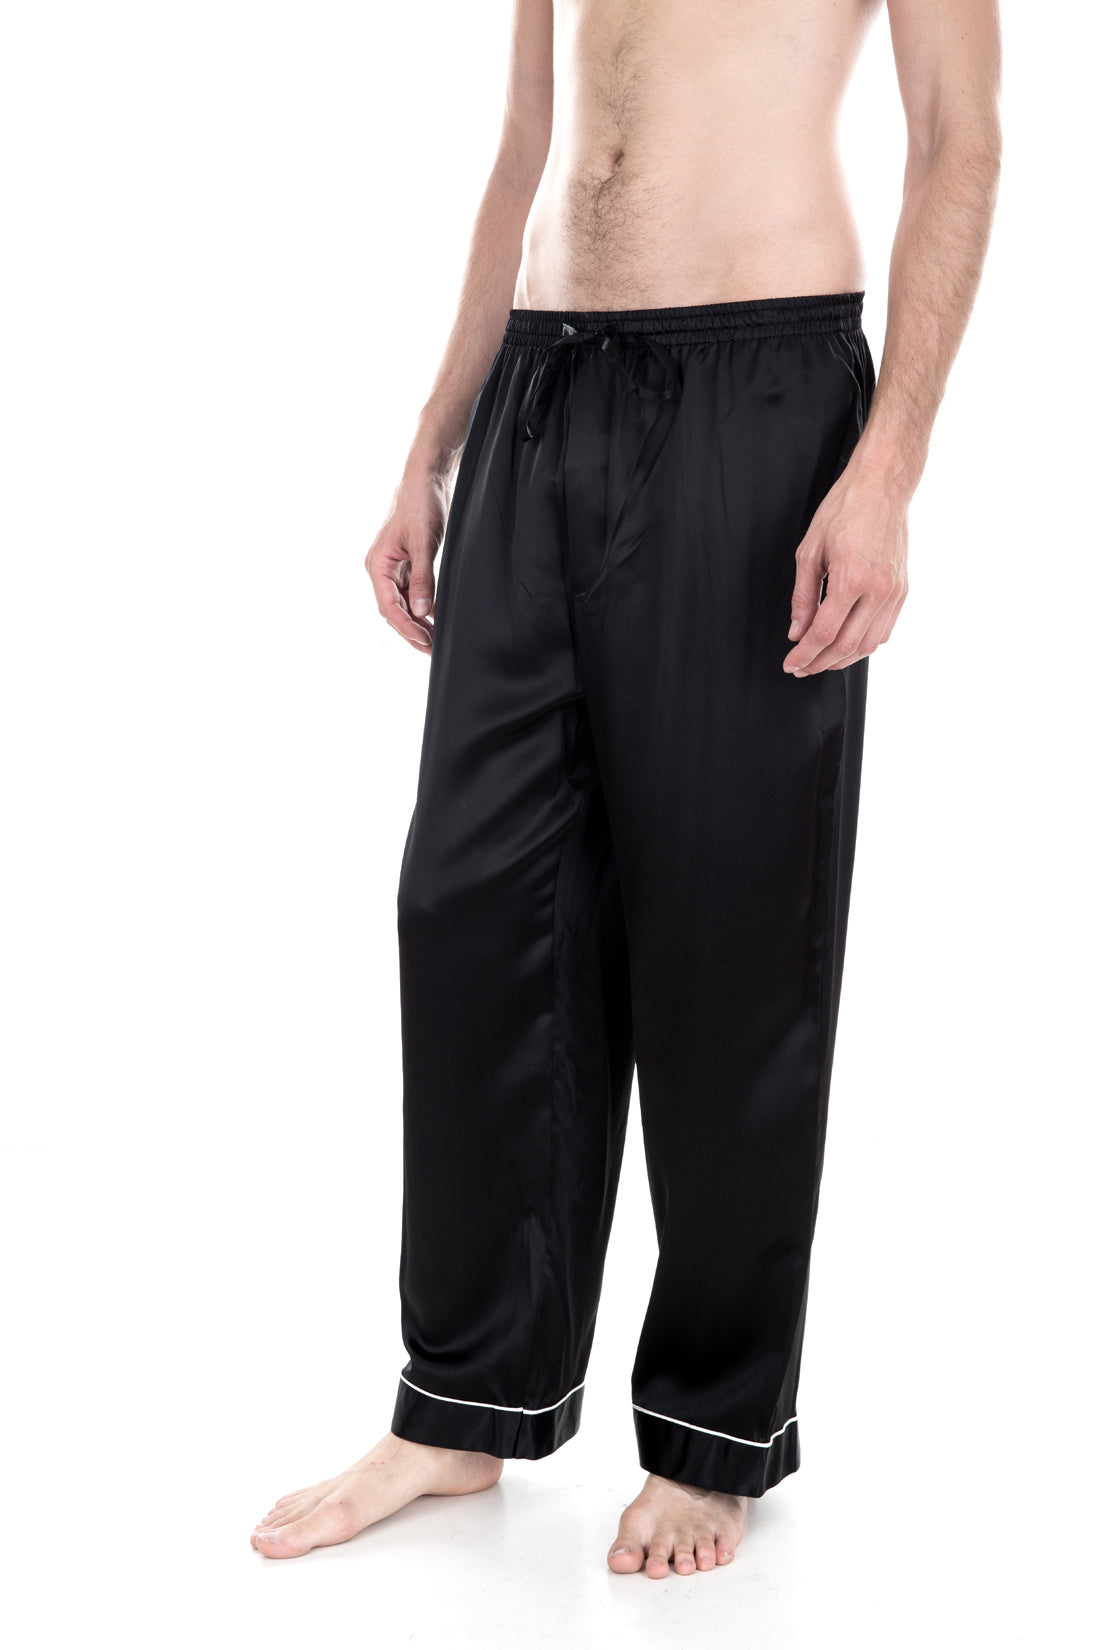 Oscar Rossa Men's Silk Sleepwear 100% Silk Pajama Pants - Black / L